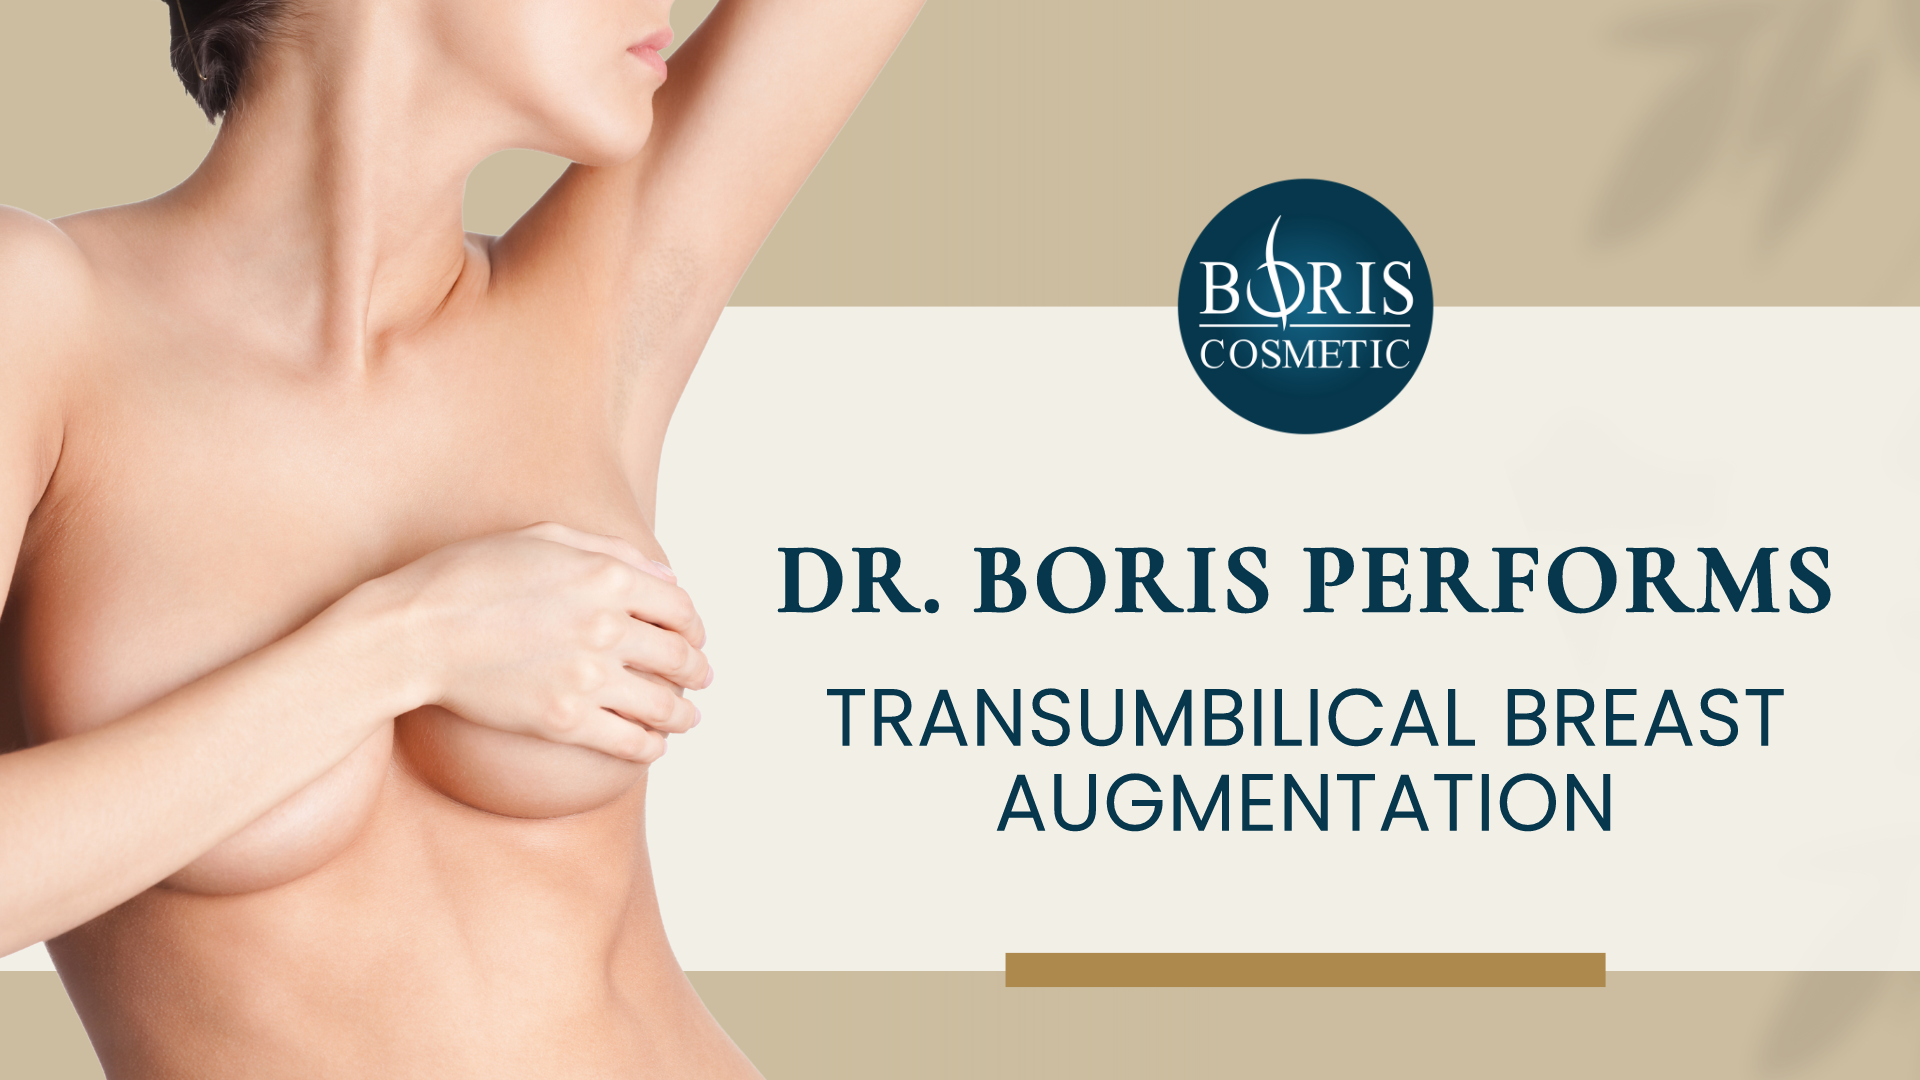 Transumbilical Breast Augmentation Suregry Boris Cosmetic Los Angeles